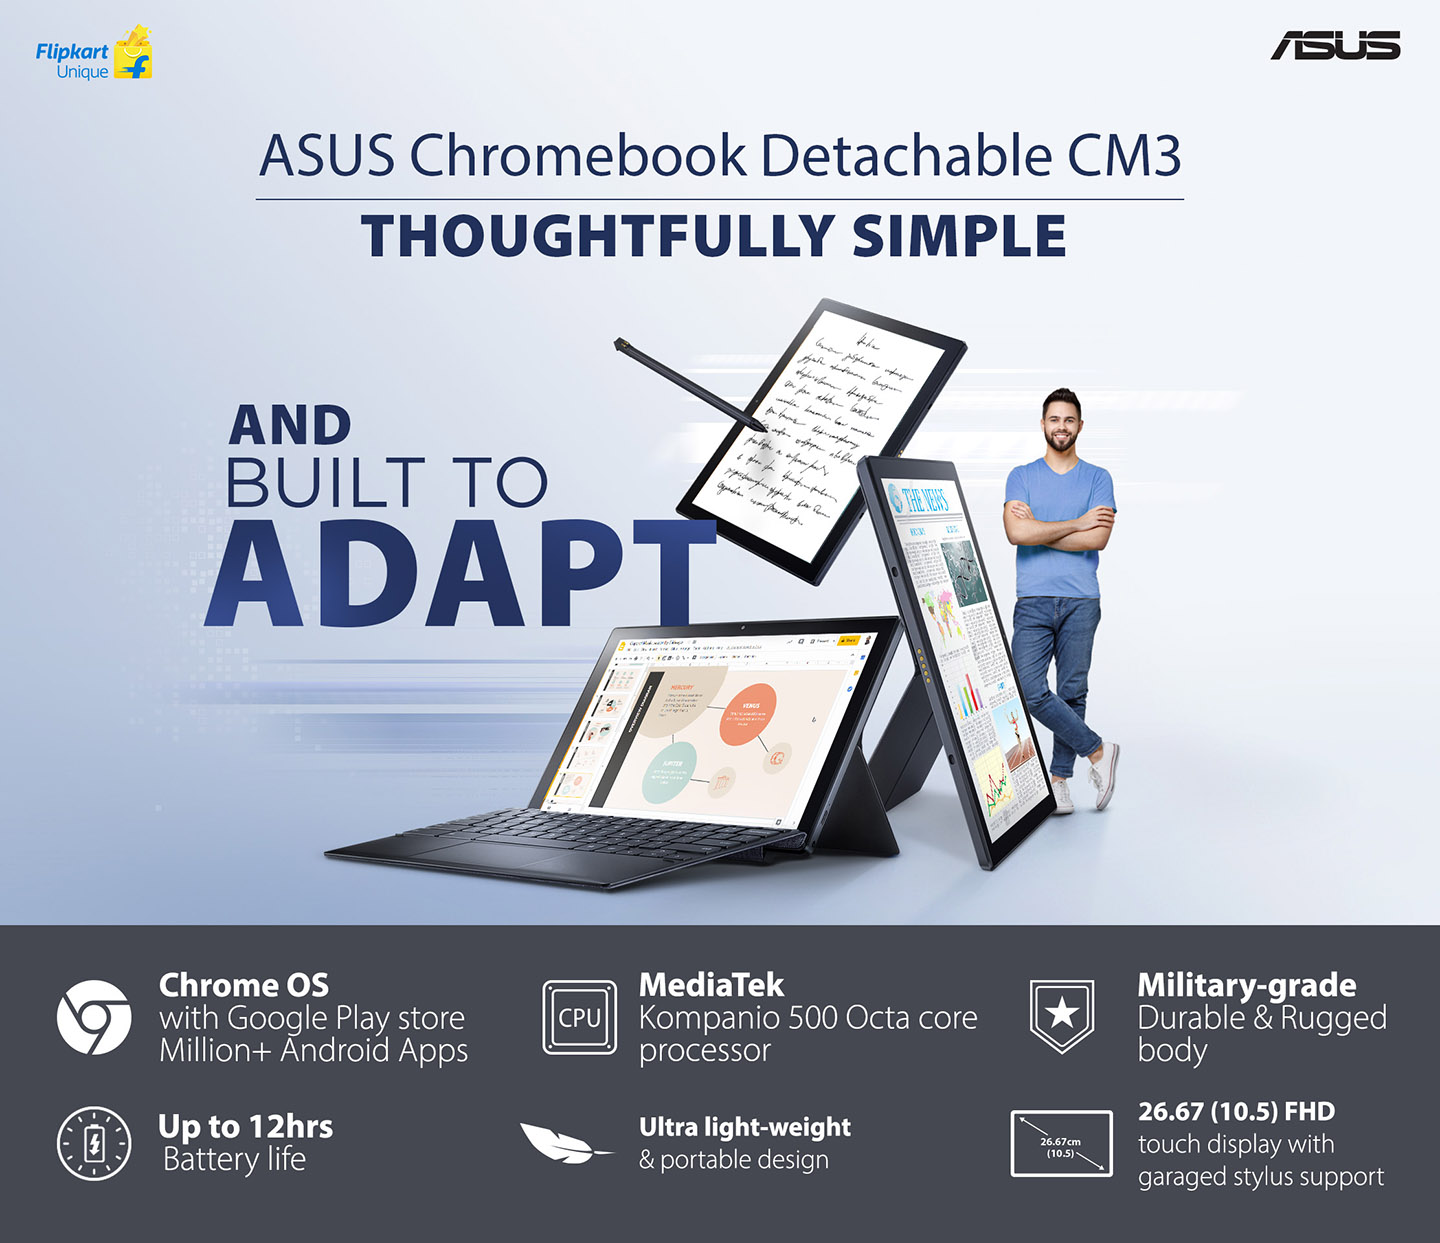 ASUS Chromebook Detachable CM3 CM3000｜Laptops For Home｜ASUS India